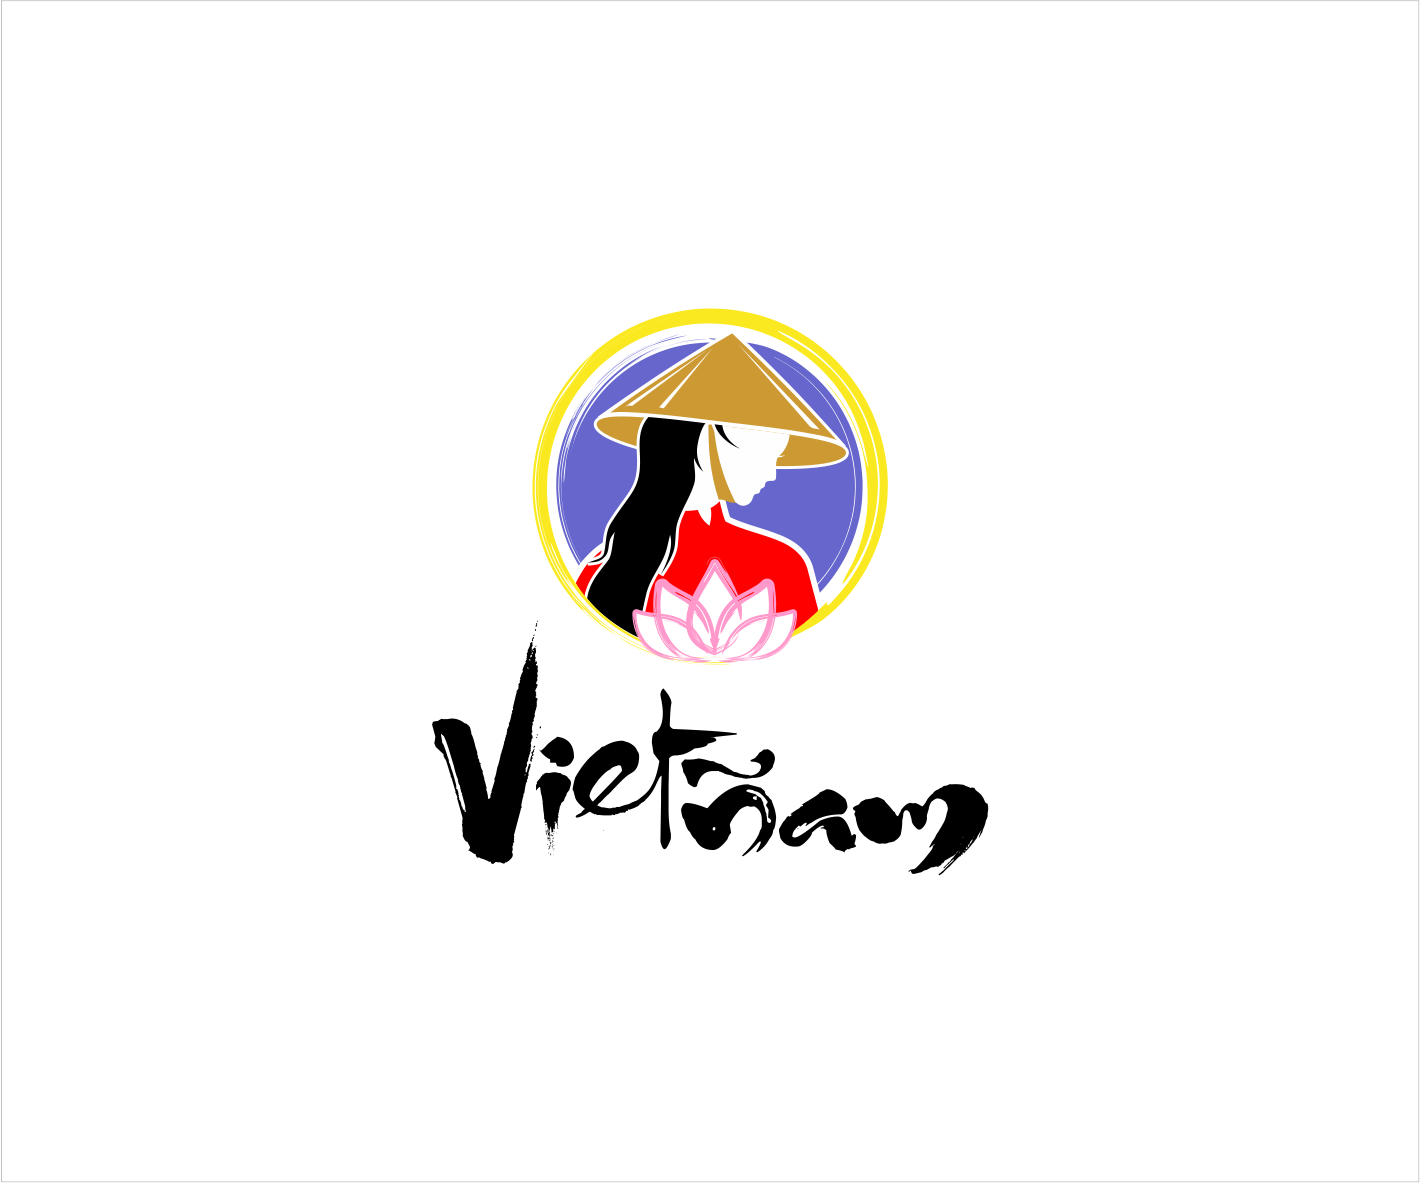 Vietnam Logo - Personable, Bold, Vietnamese Restaurant Logo Design for Vietnam by ...